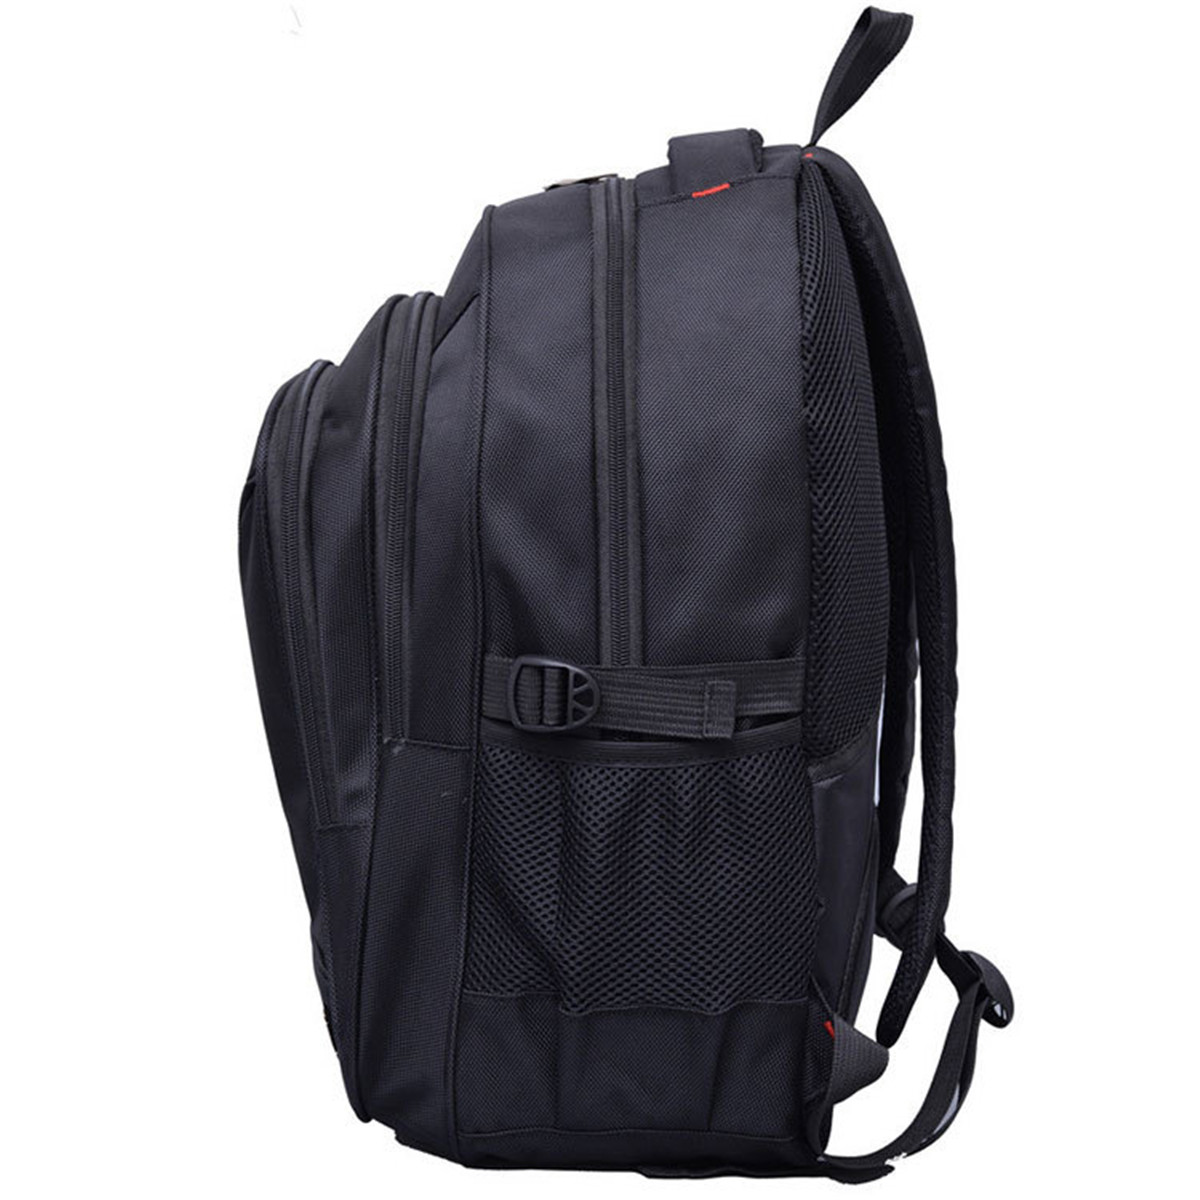 IPReetrade-156inch-Waterproof-Laptop-Backpack-Nylon-Business-Travel-Rucksack-1166015-3